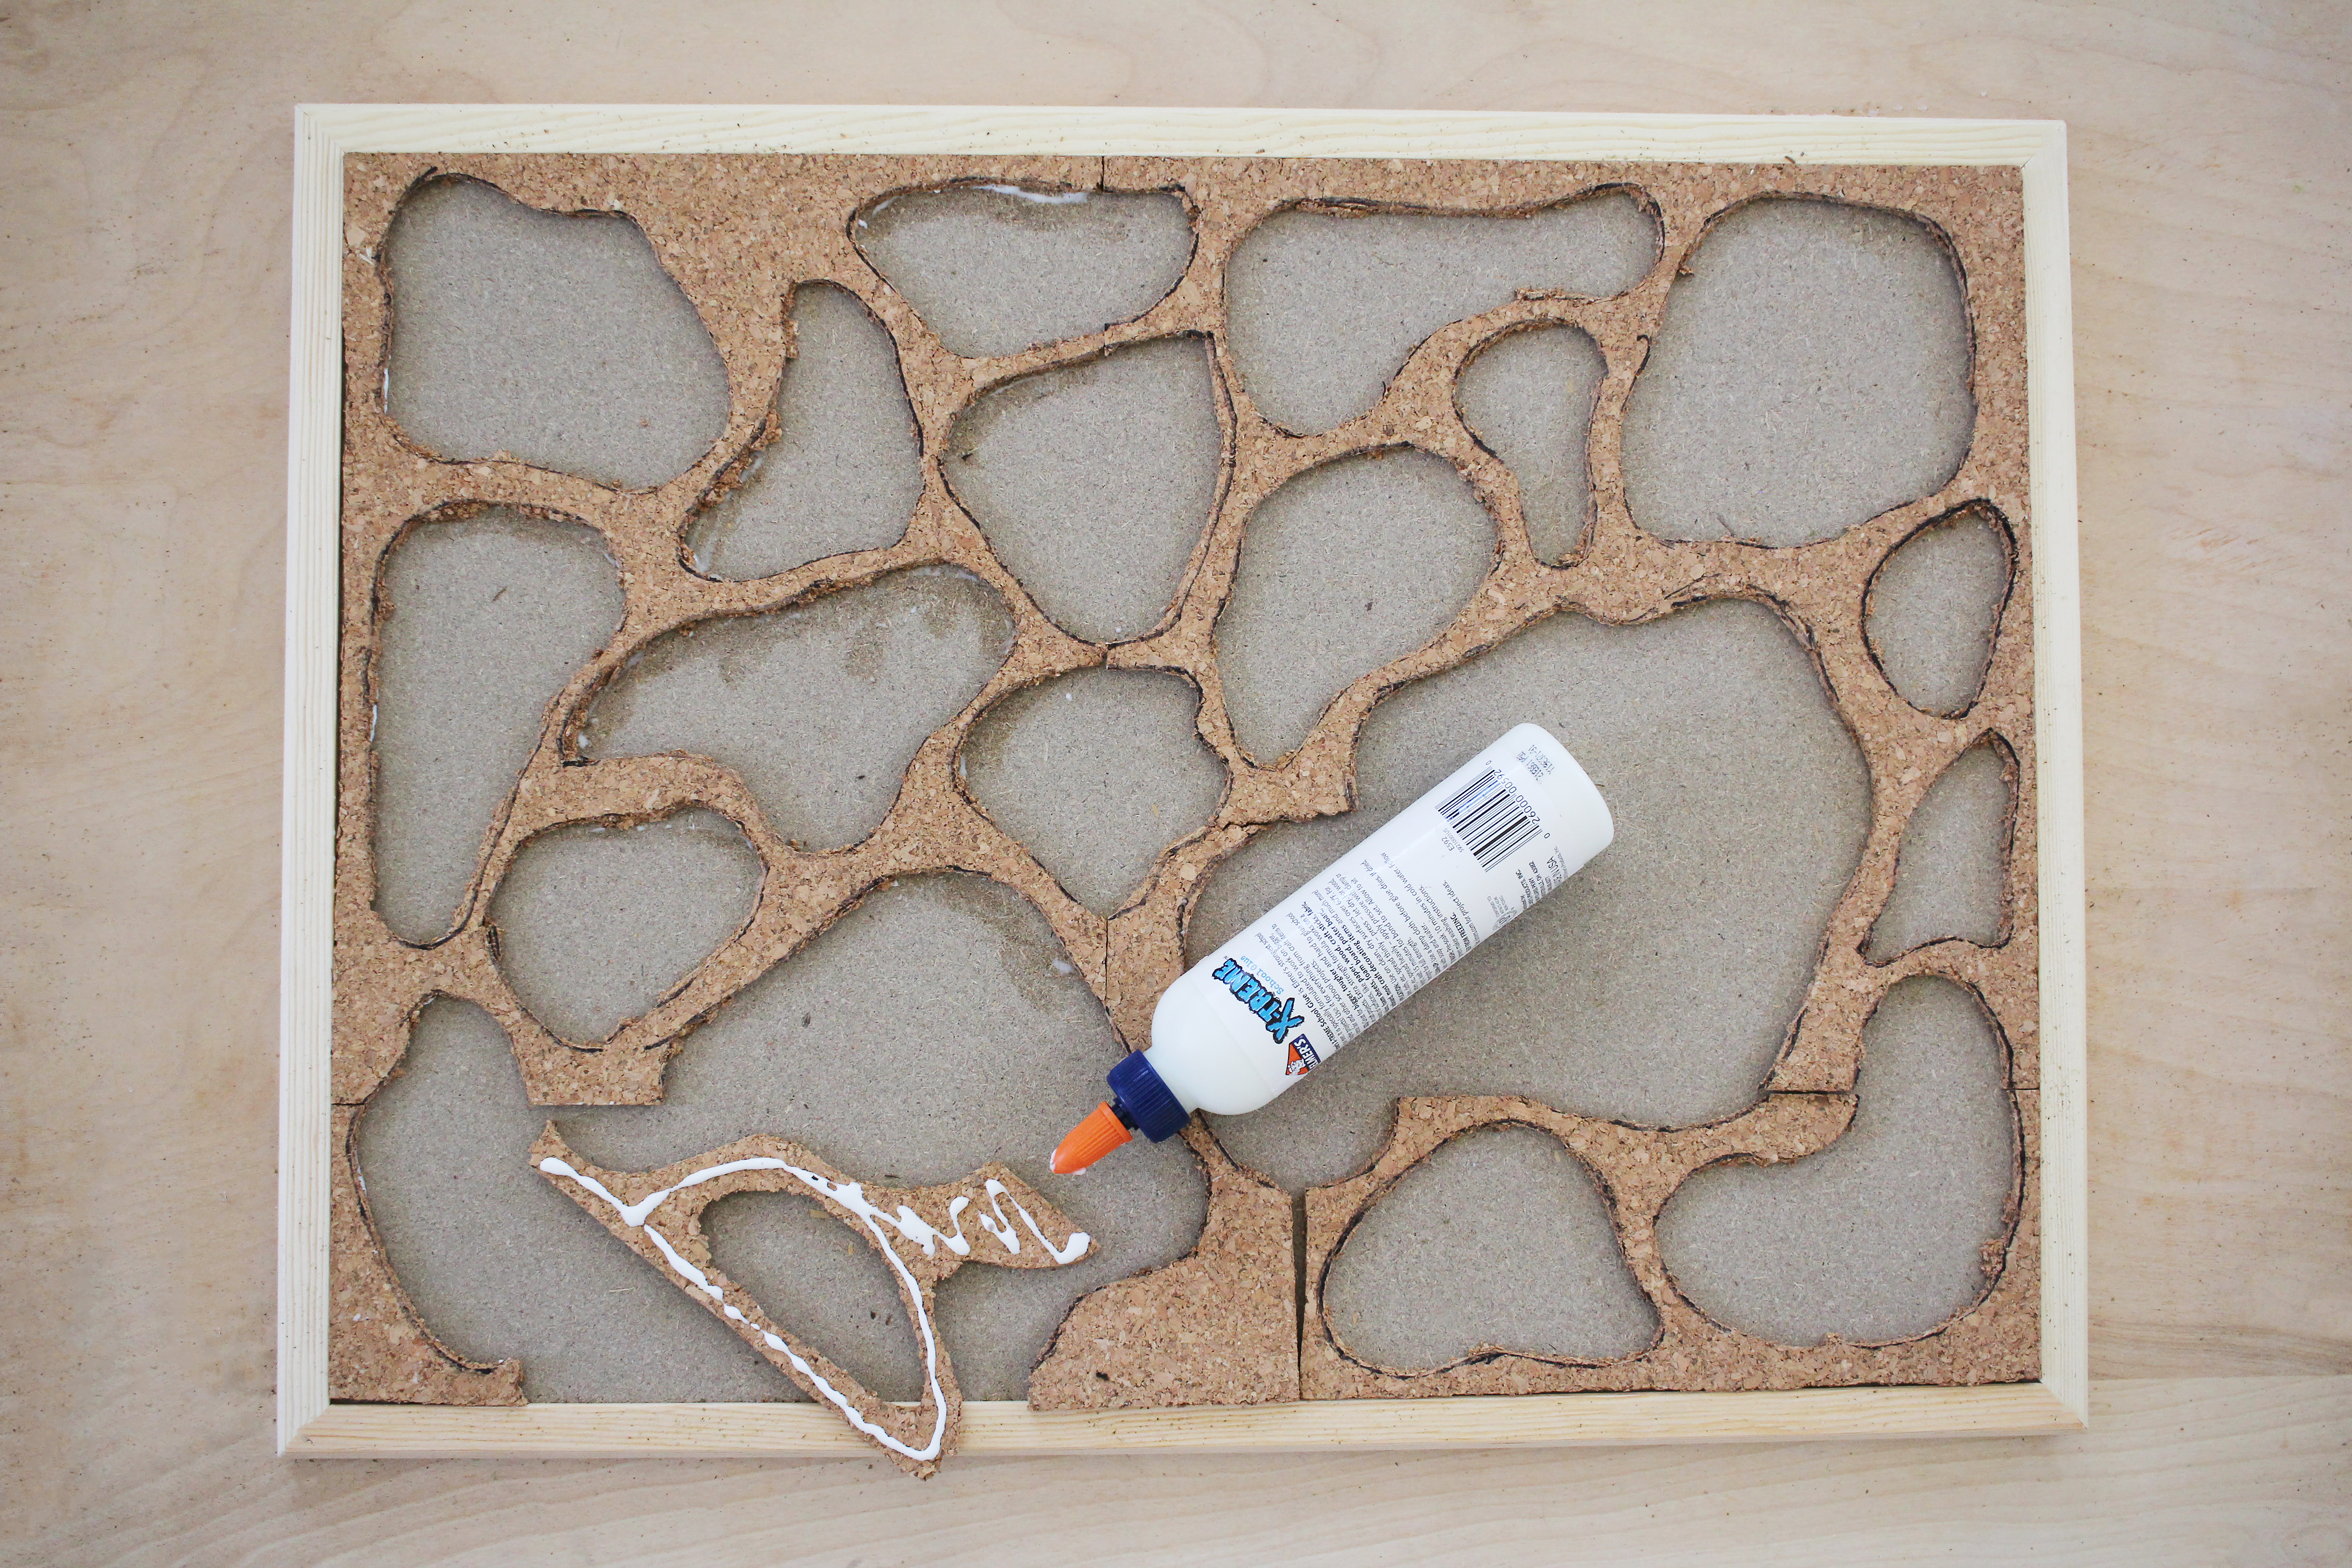 DIY Moss Bath Mat Kit: Transform Your Bathroom – Moss Acres